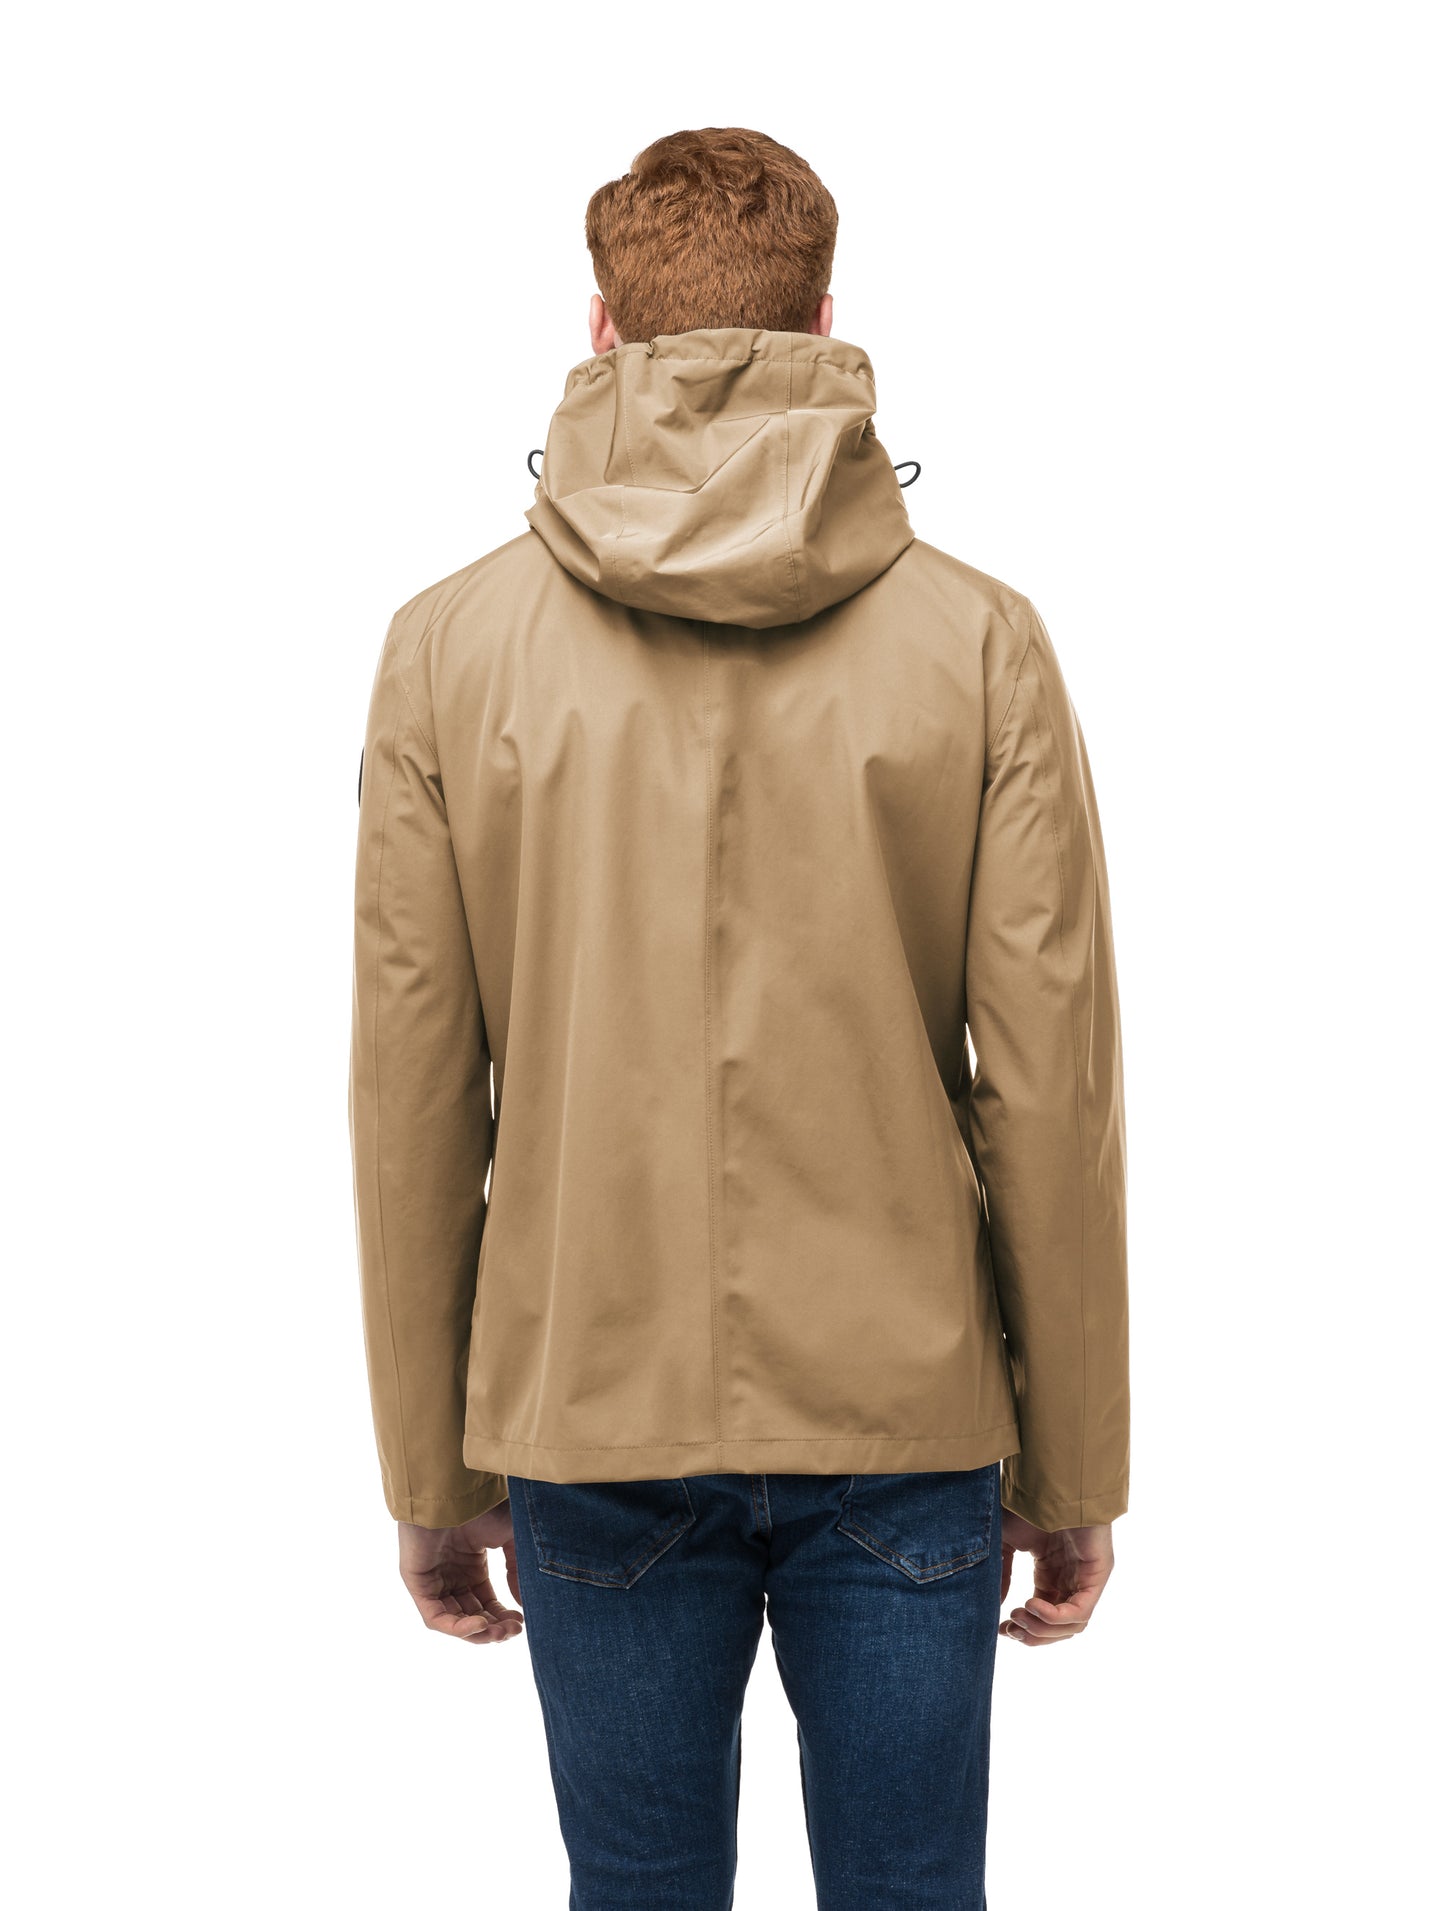 Men's waist length jacket in Cork